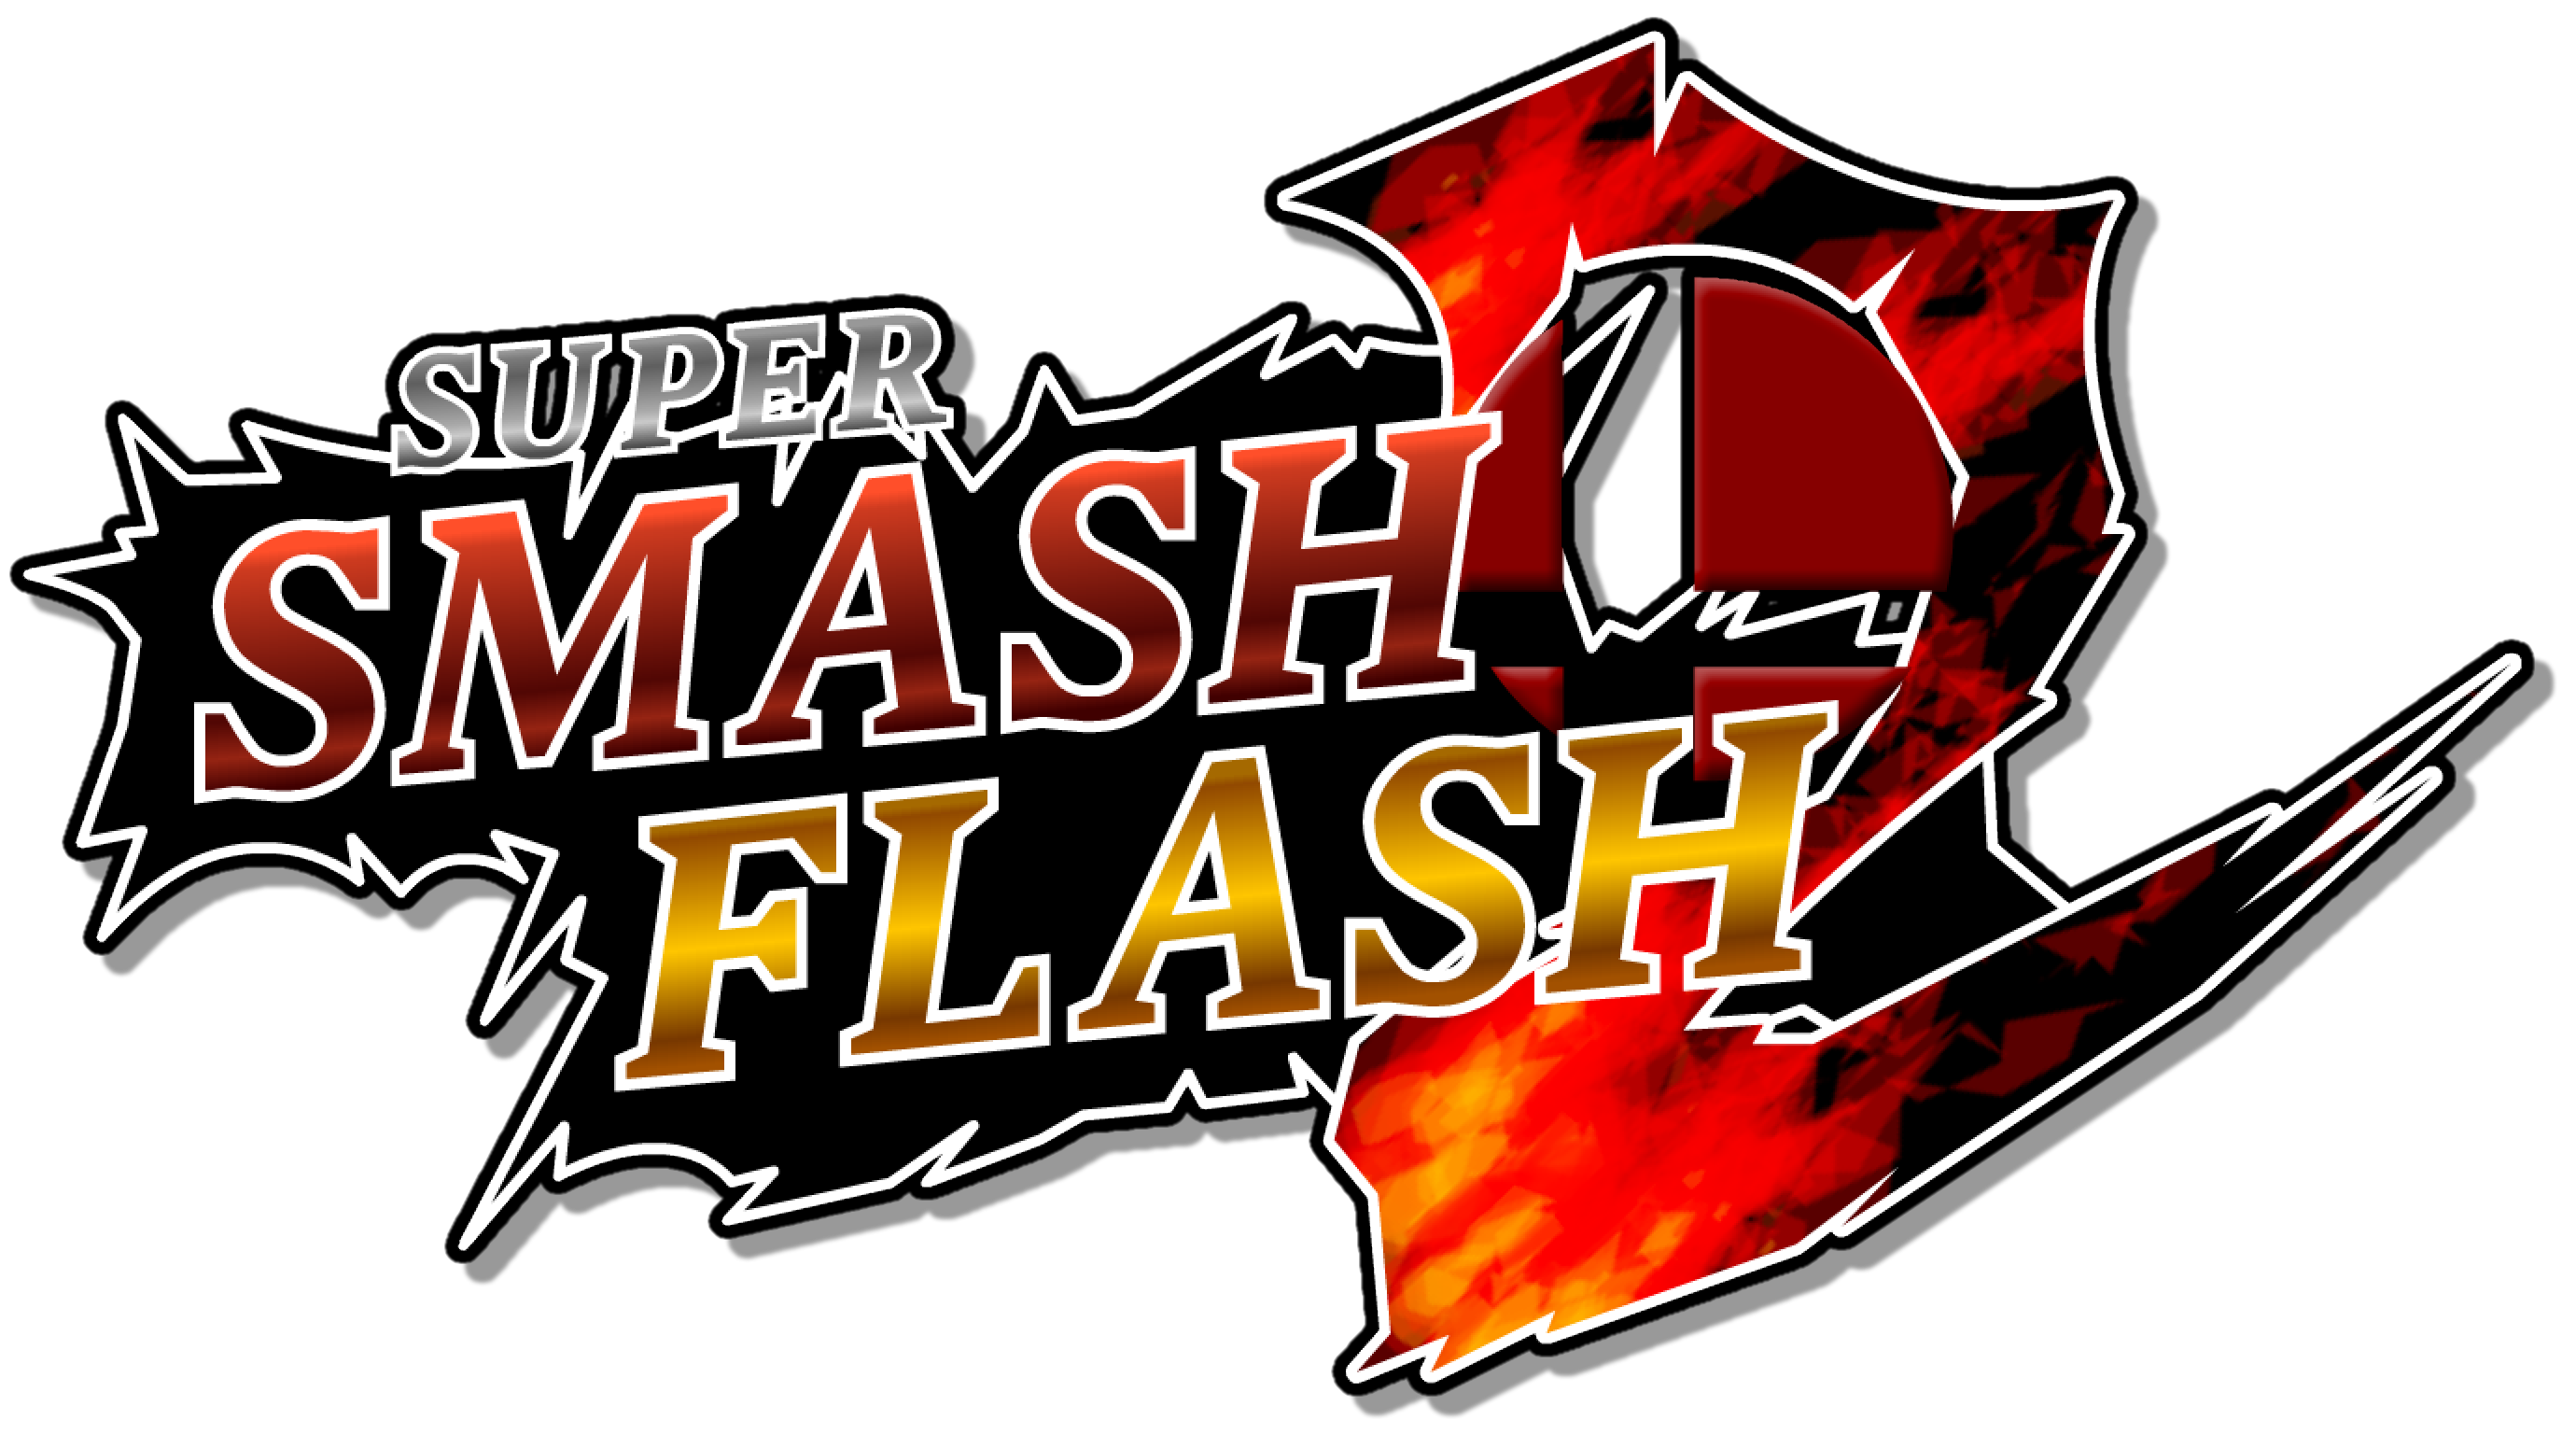 super smash flash 2 beta e